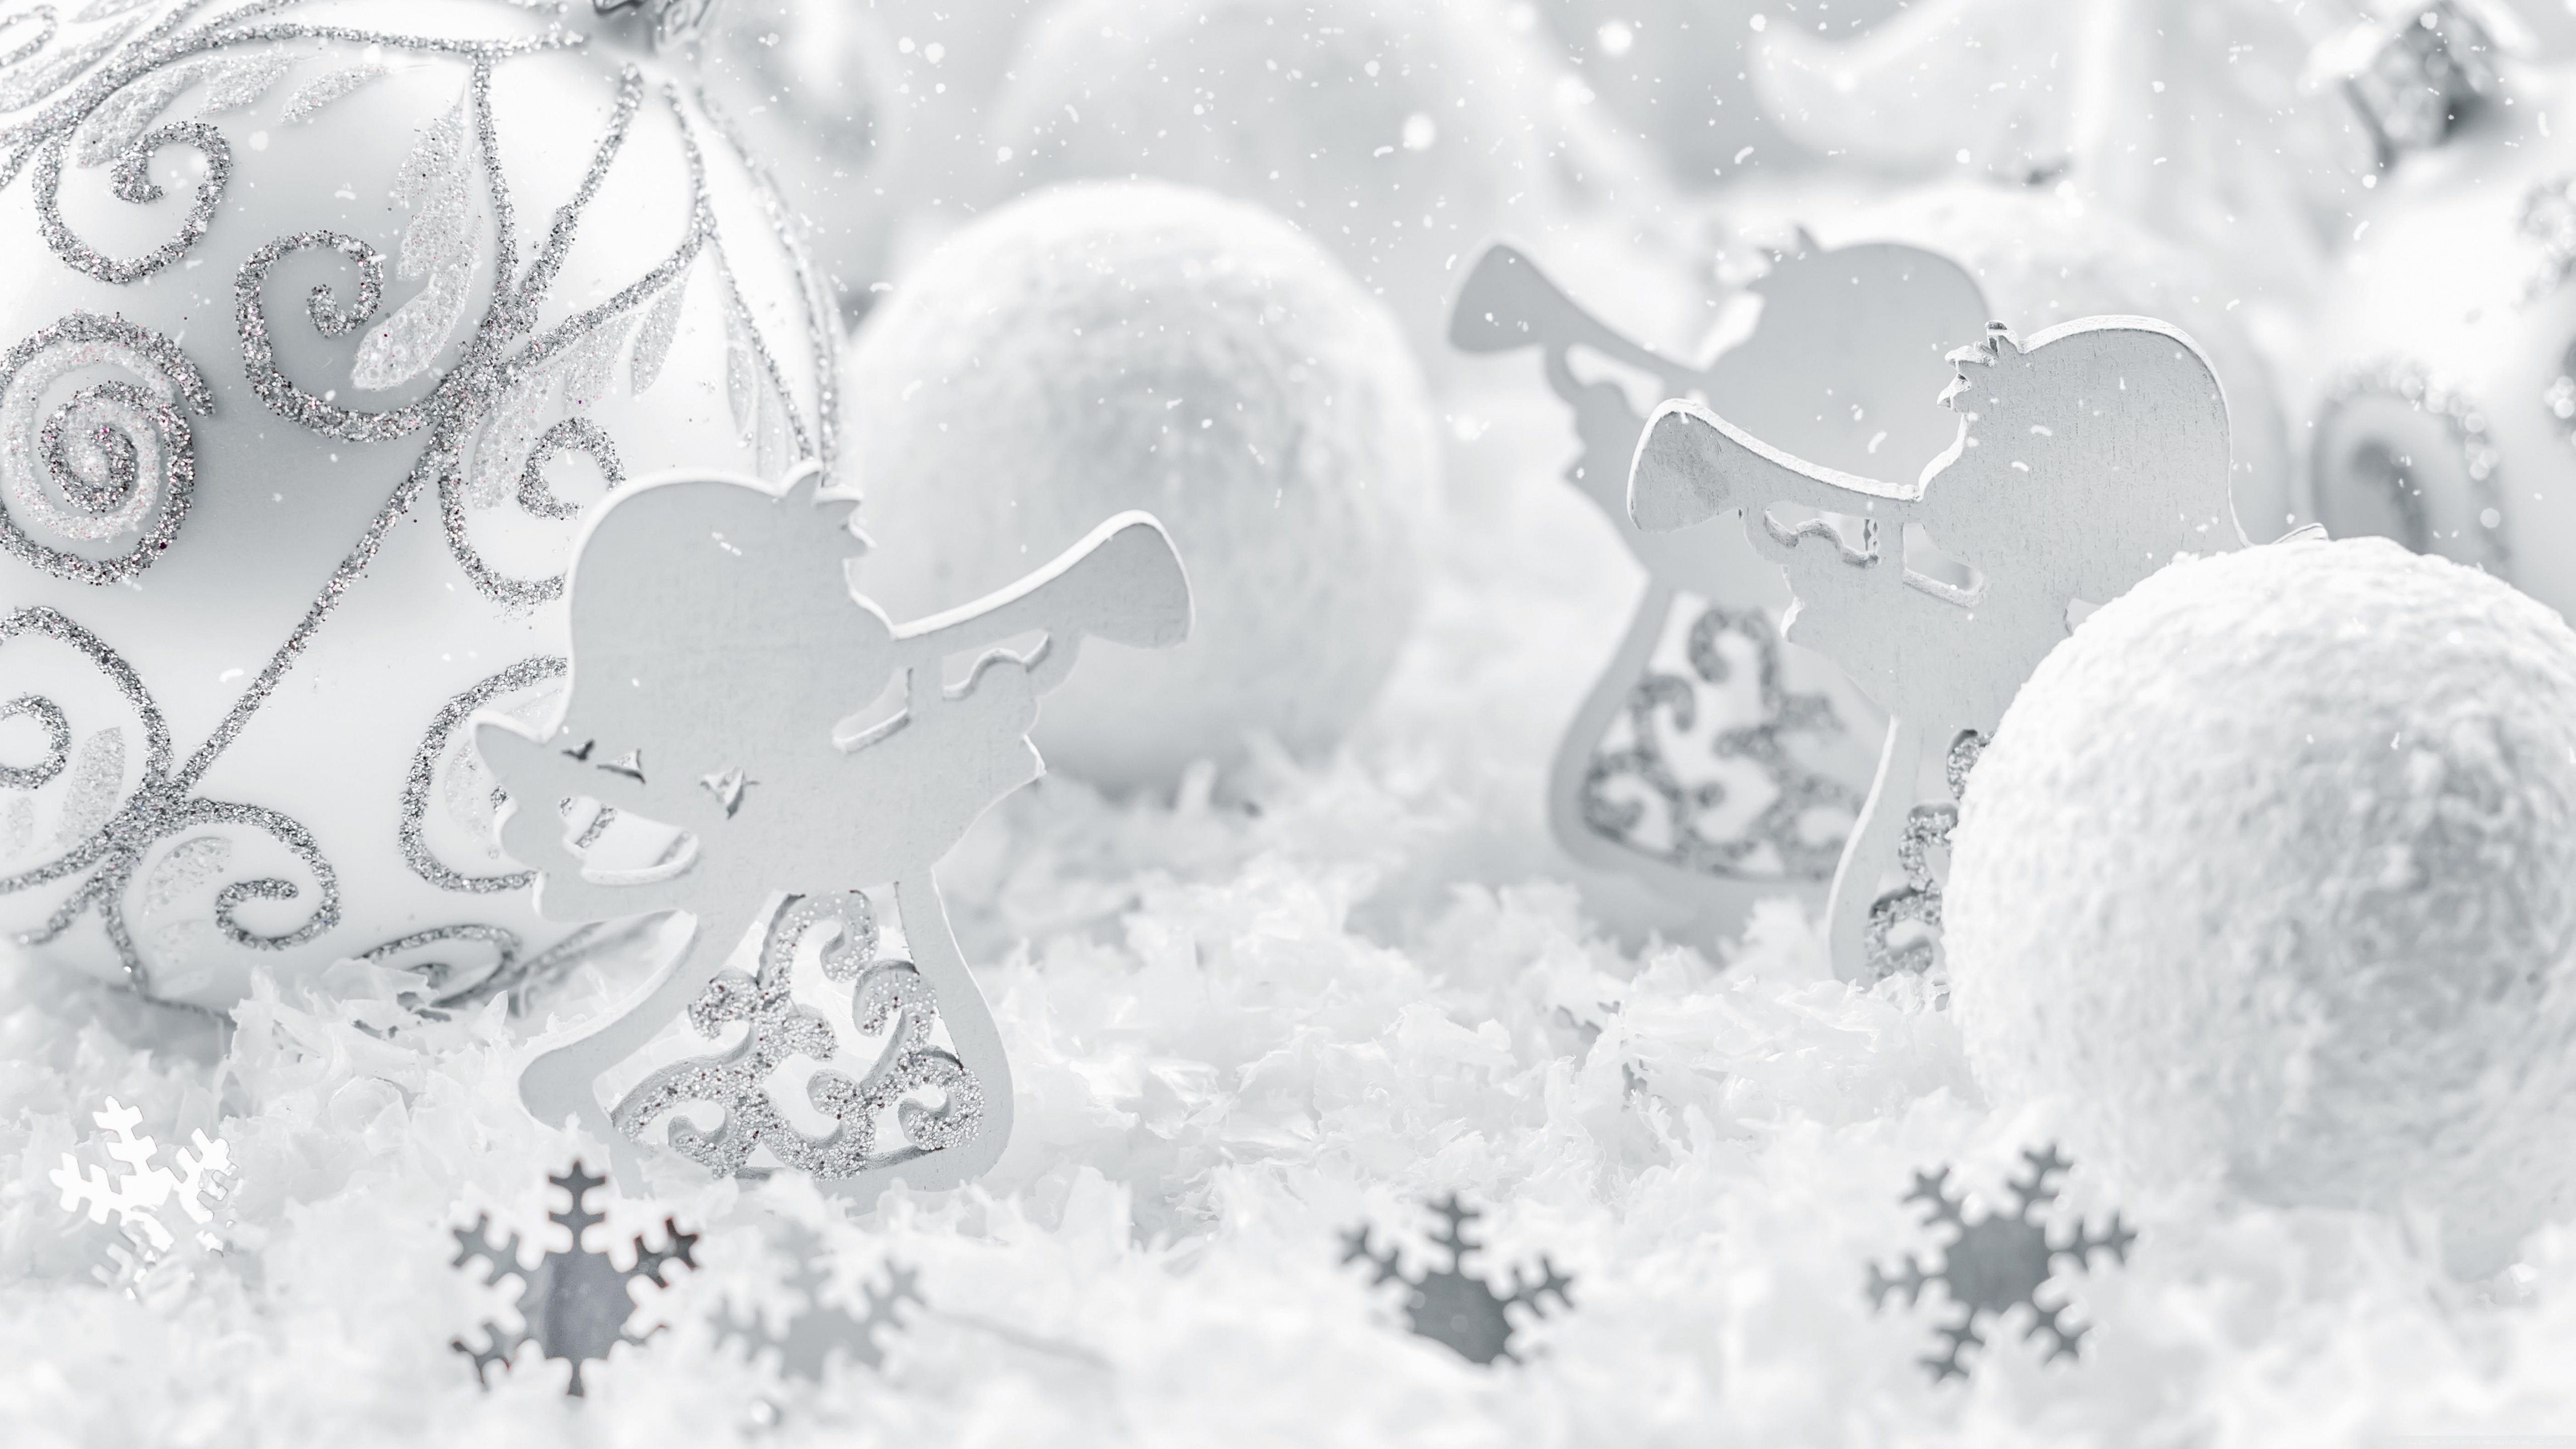 White Christmas Background Images  Free Download on Freepik